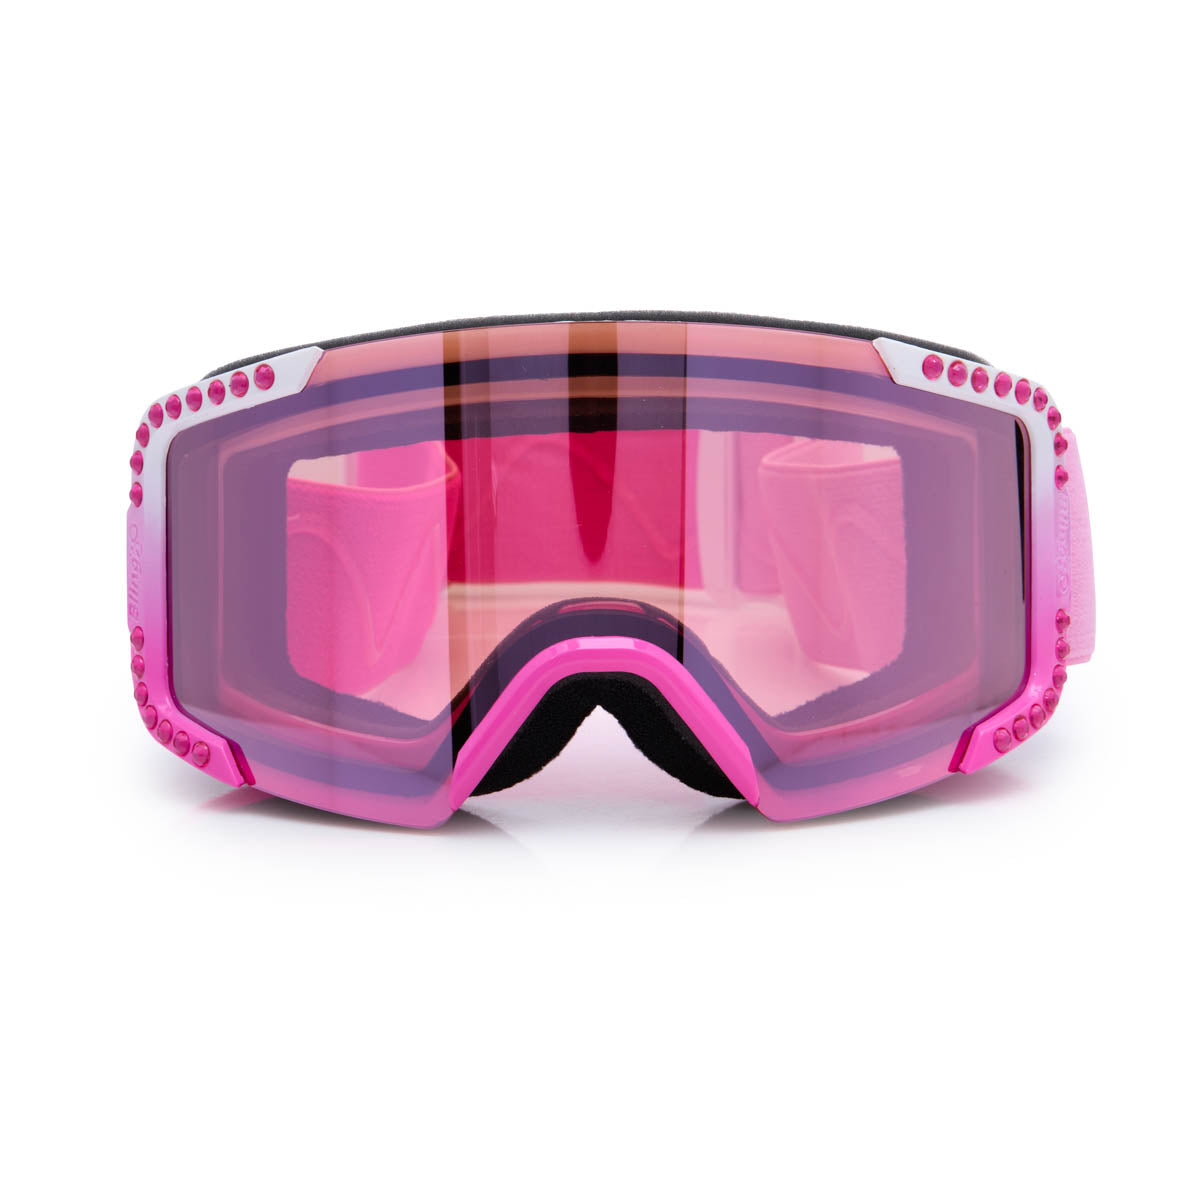 Bling2o Ice of Purple Glaciers Ski Mask